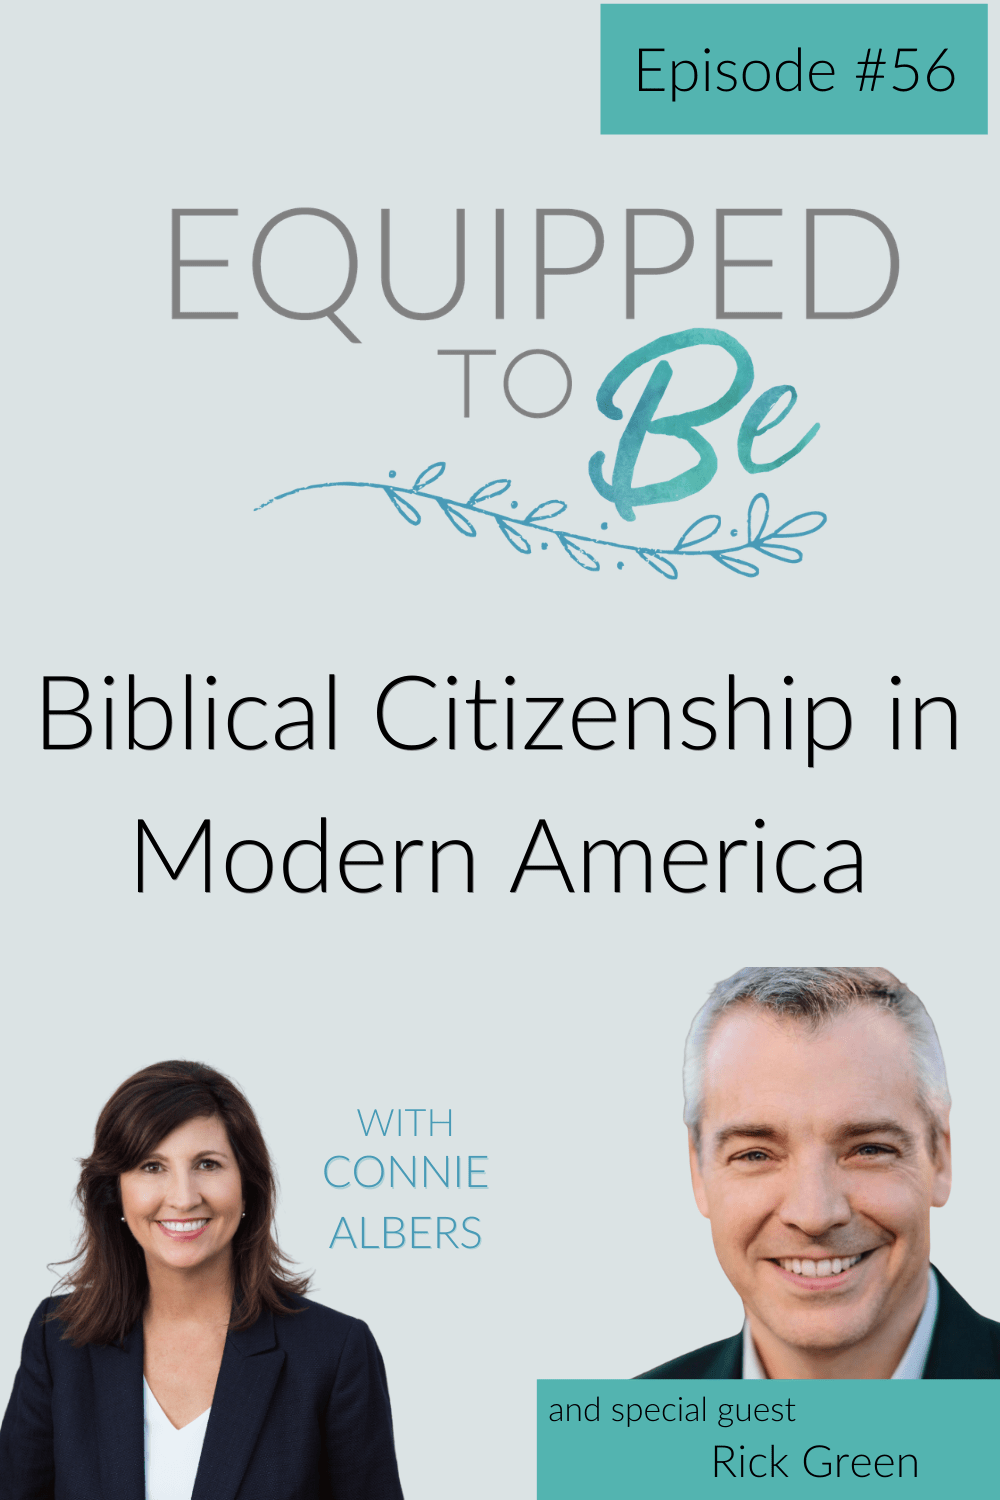 Biblical Citizenship in Modern America with Rick Green - ETB #56